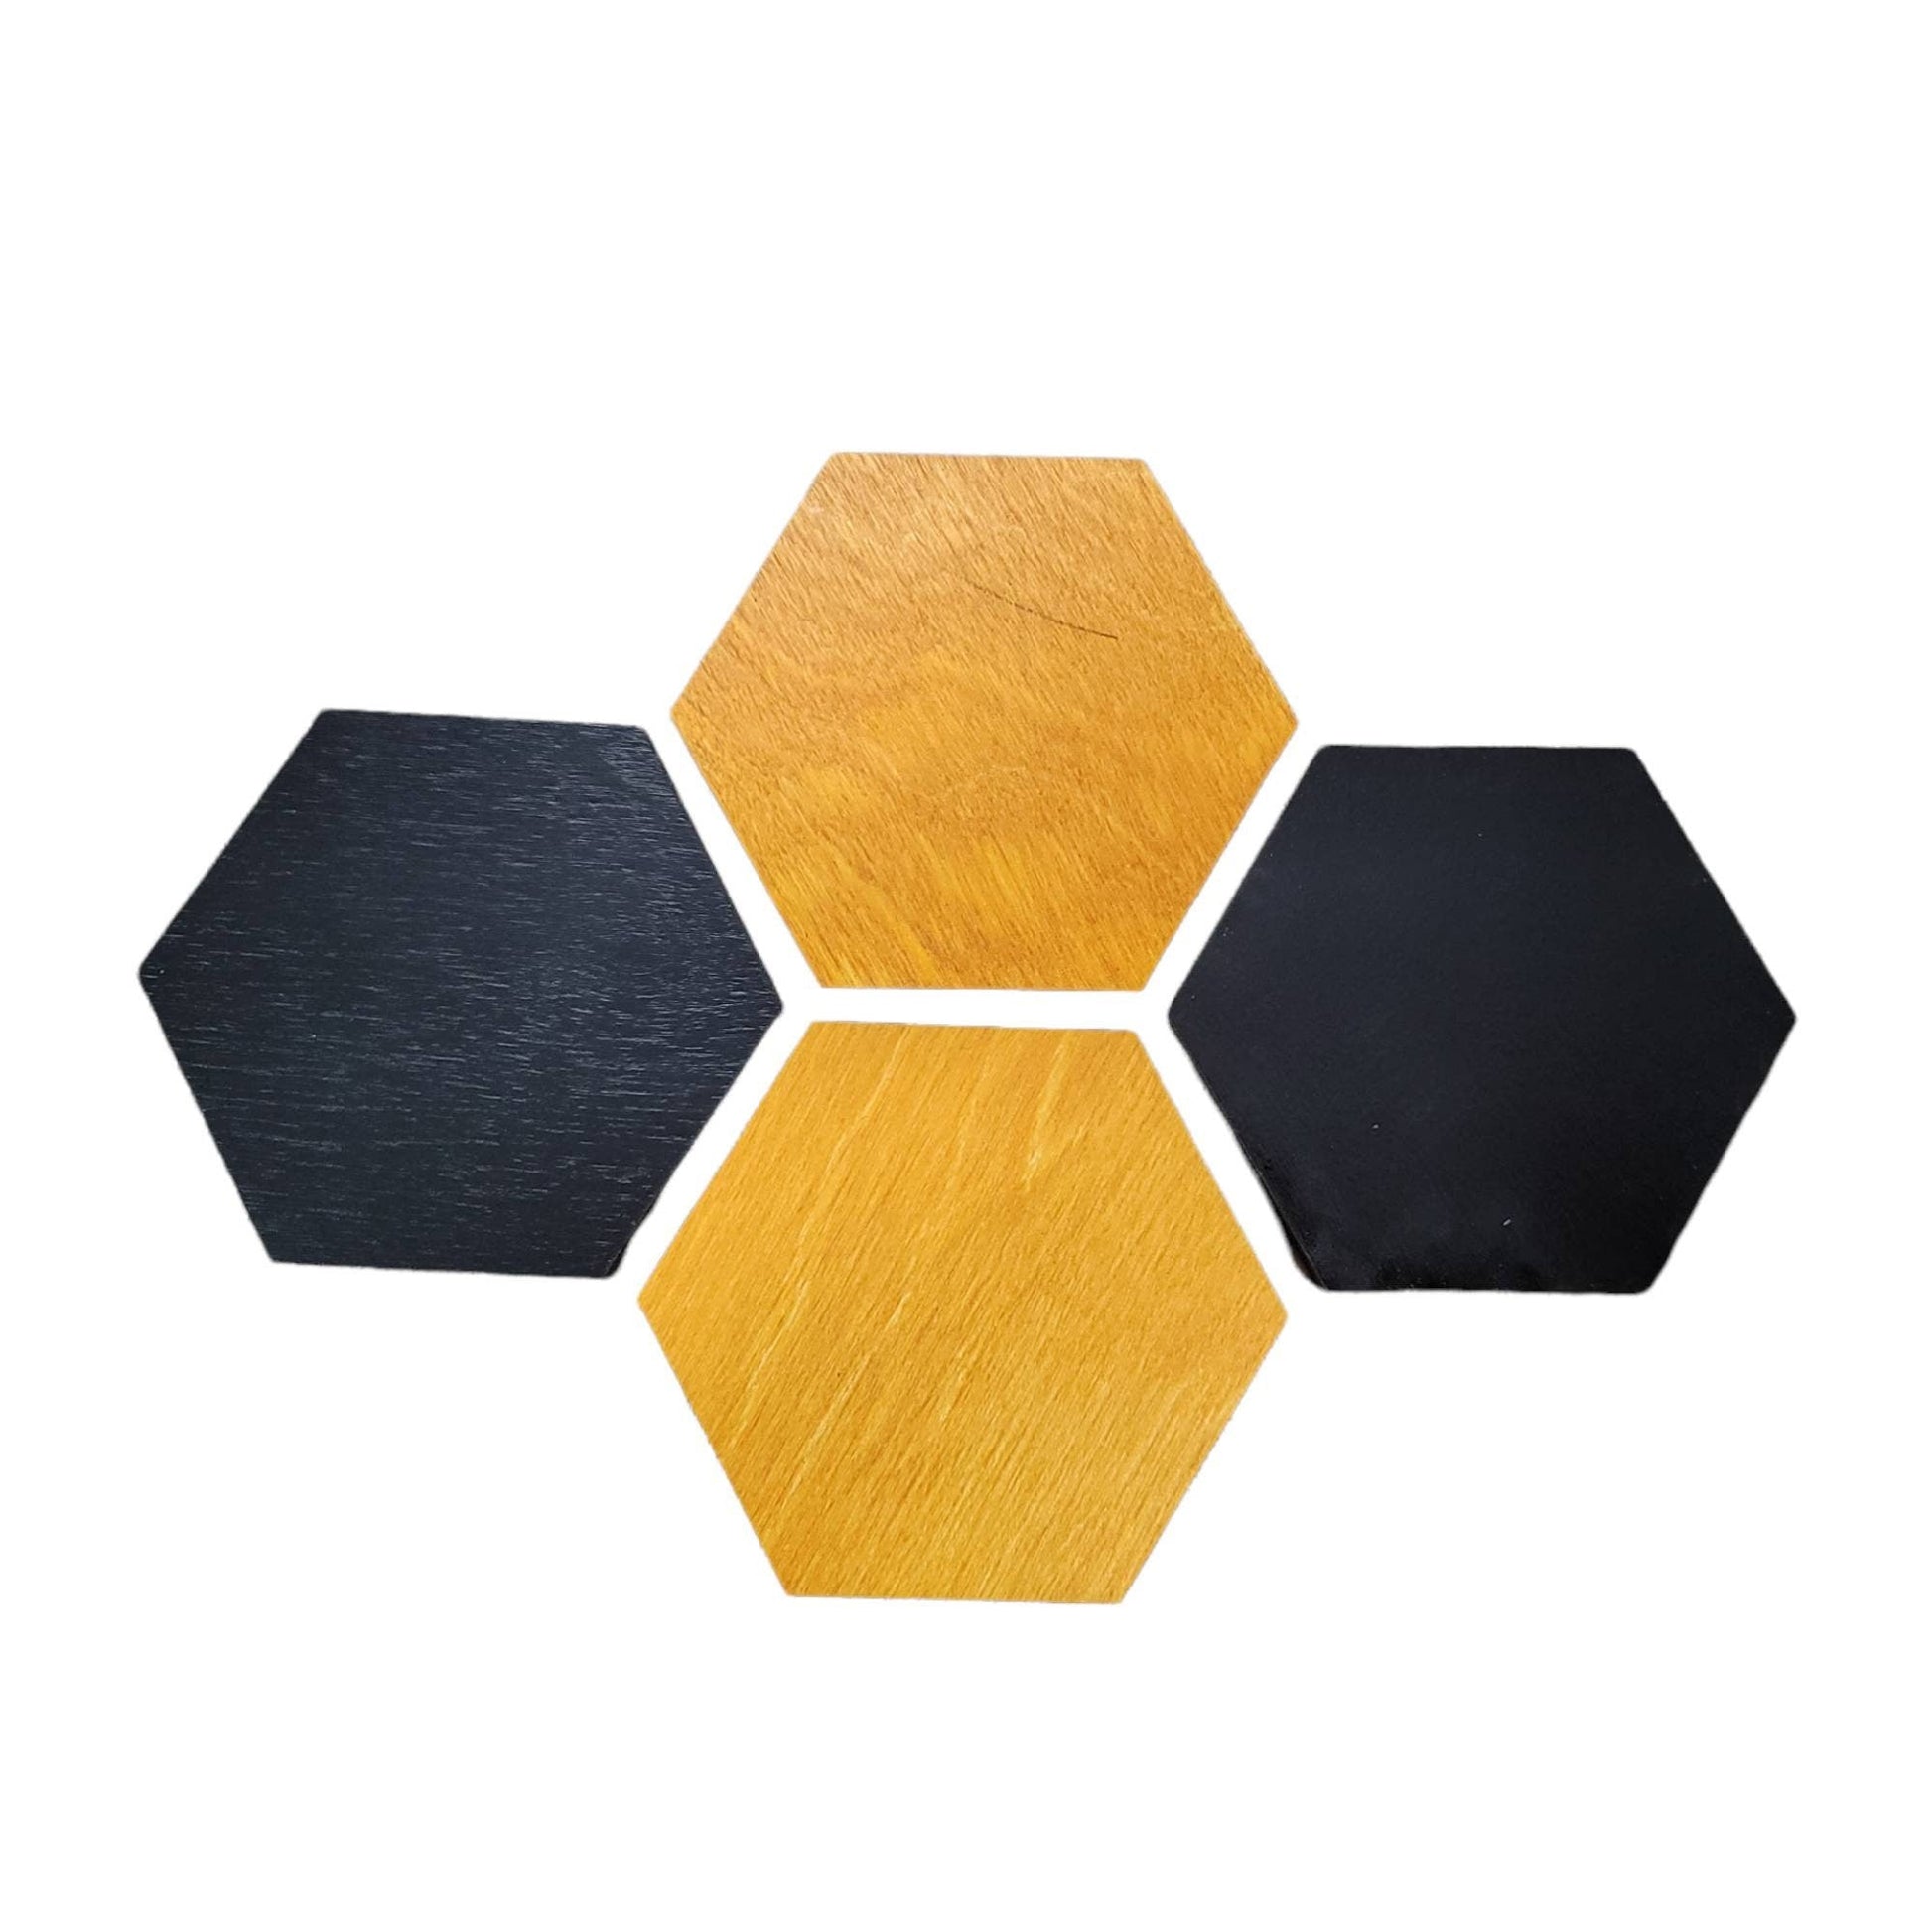 Coasters Honeybee coasters Set of 4 | Jones Laser Craft Personalized Gift